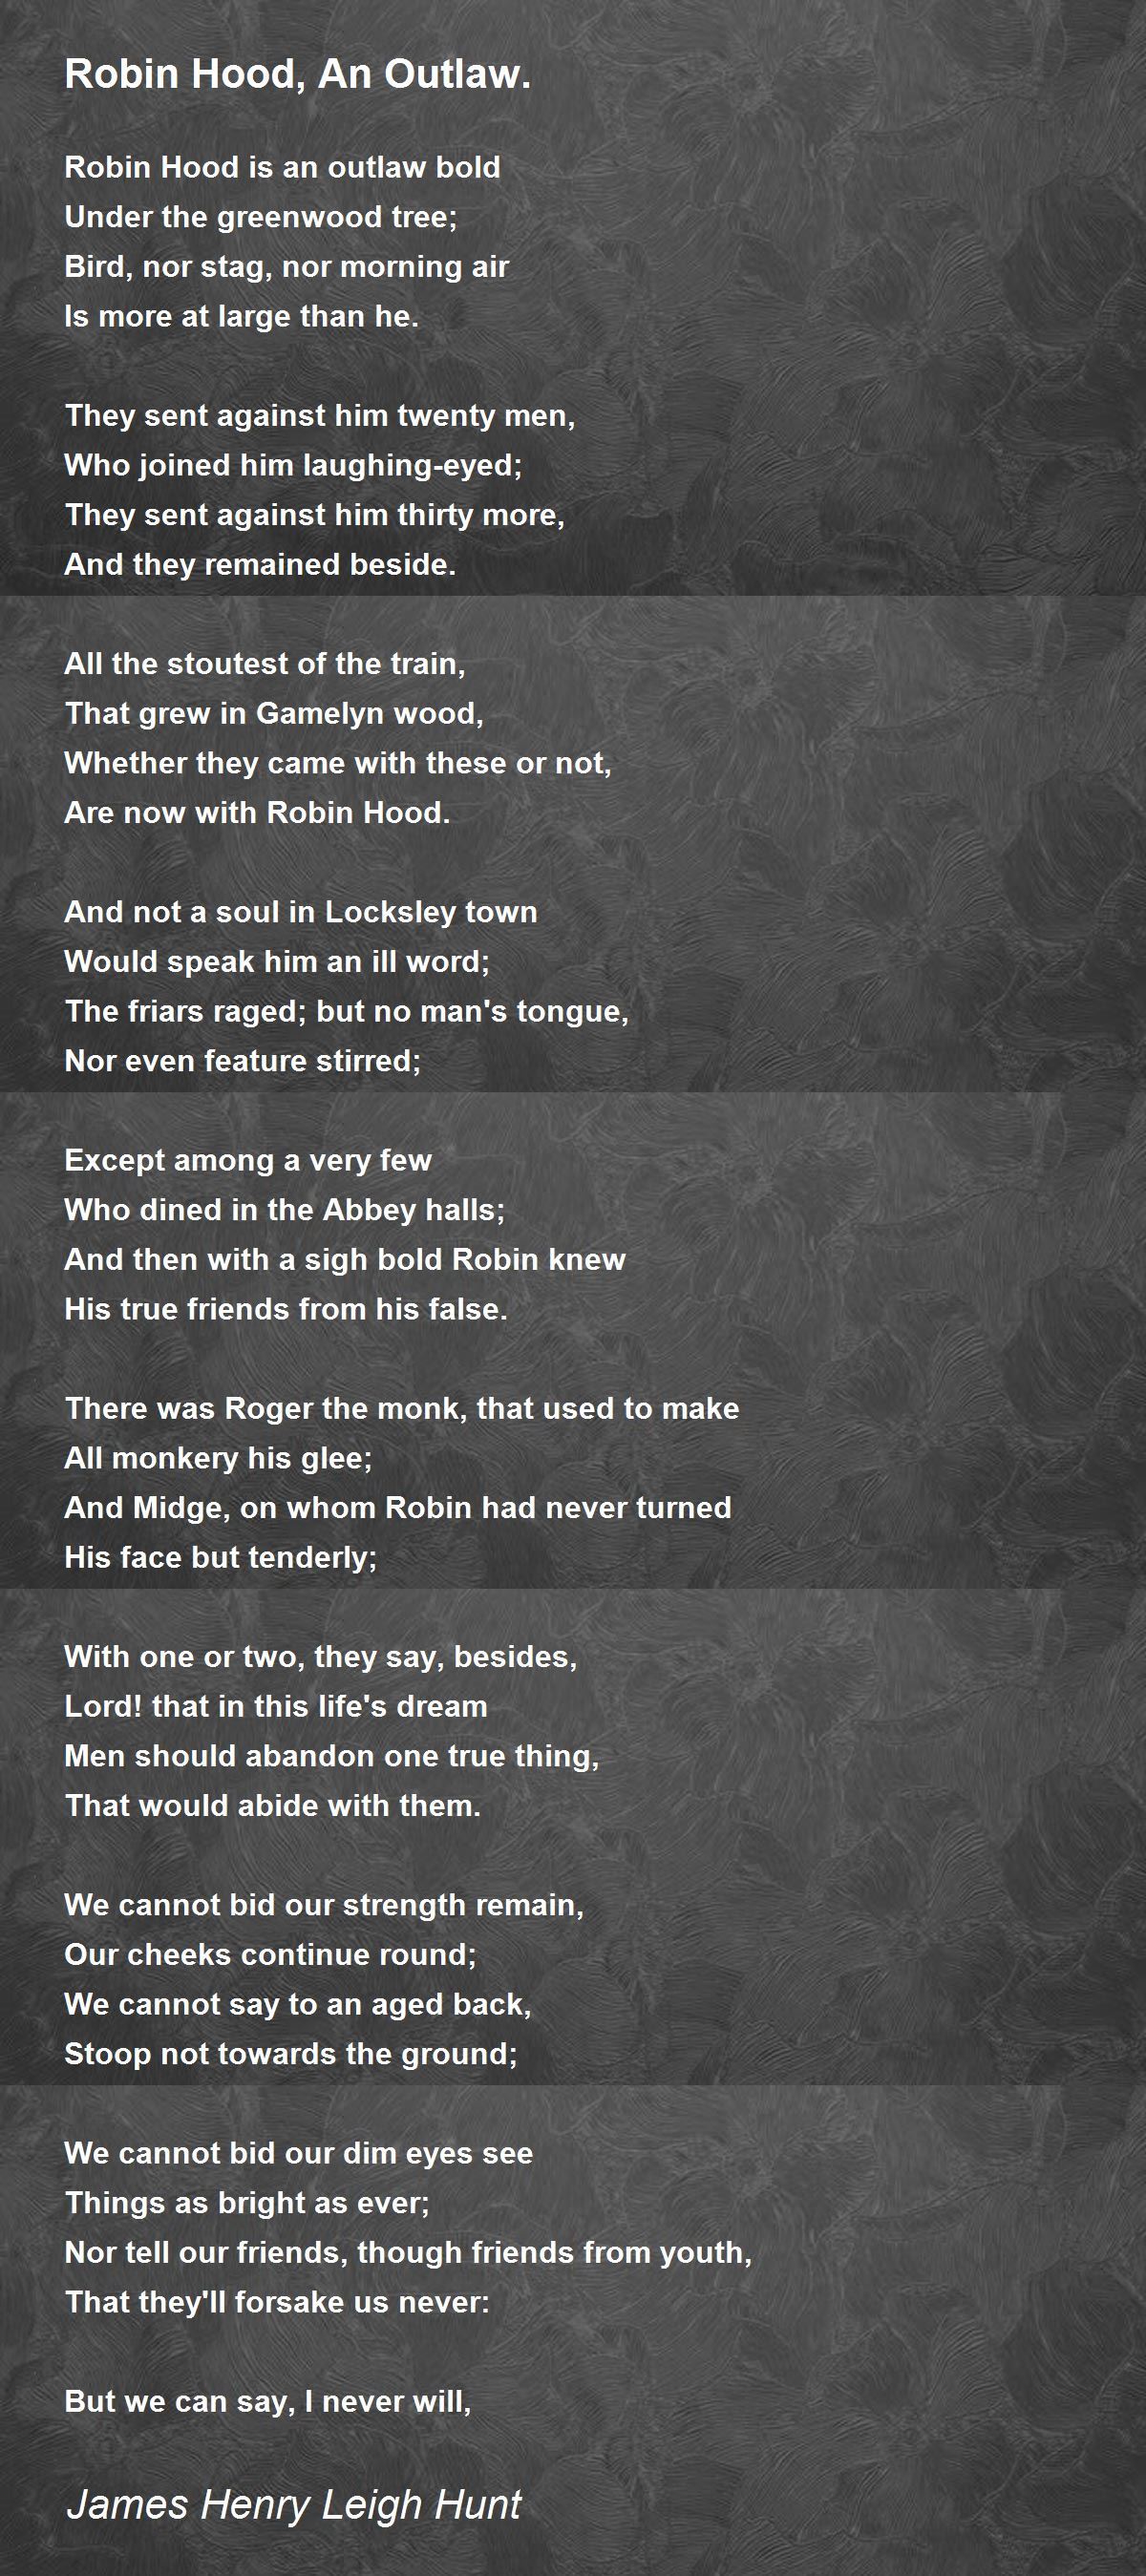 Robin Hood, An Outlaw. Poem by James Henry Leigh Hunt - Poem Hunter